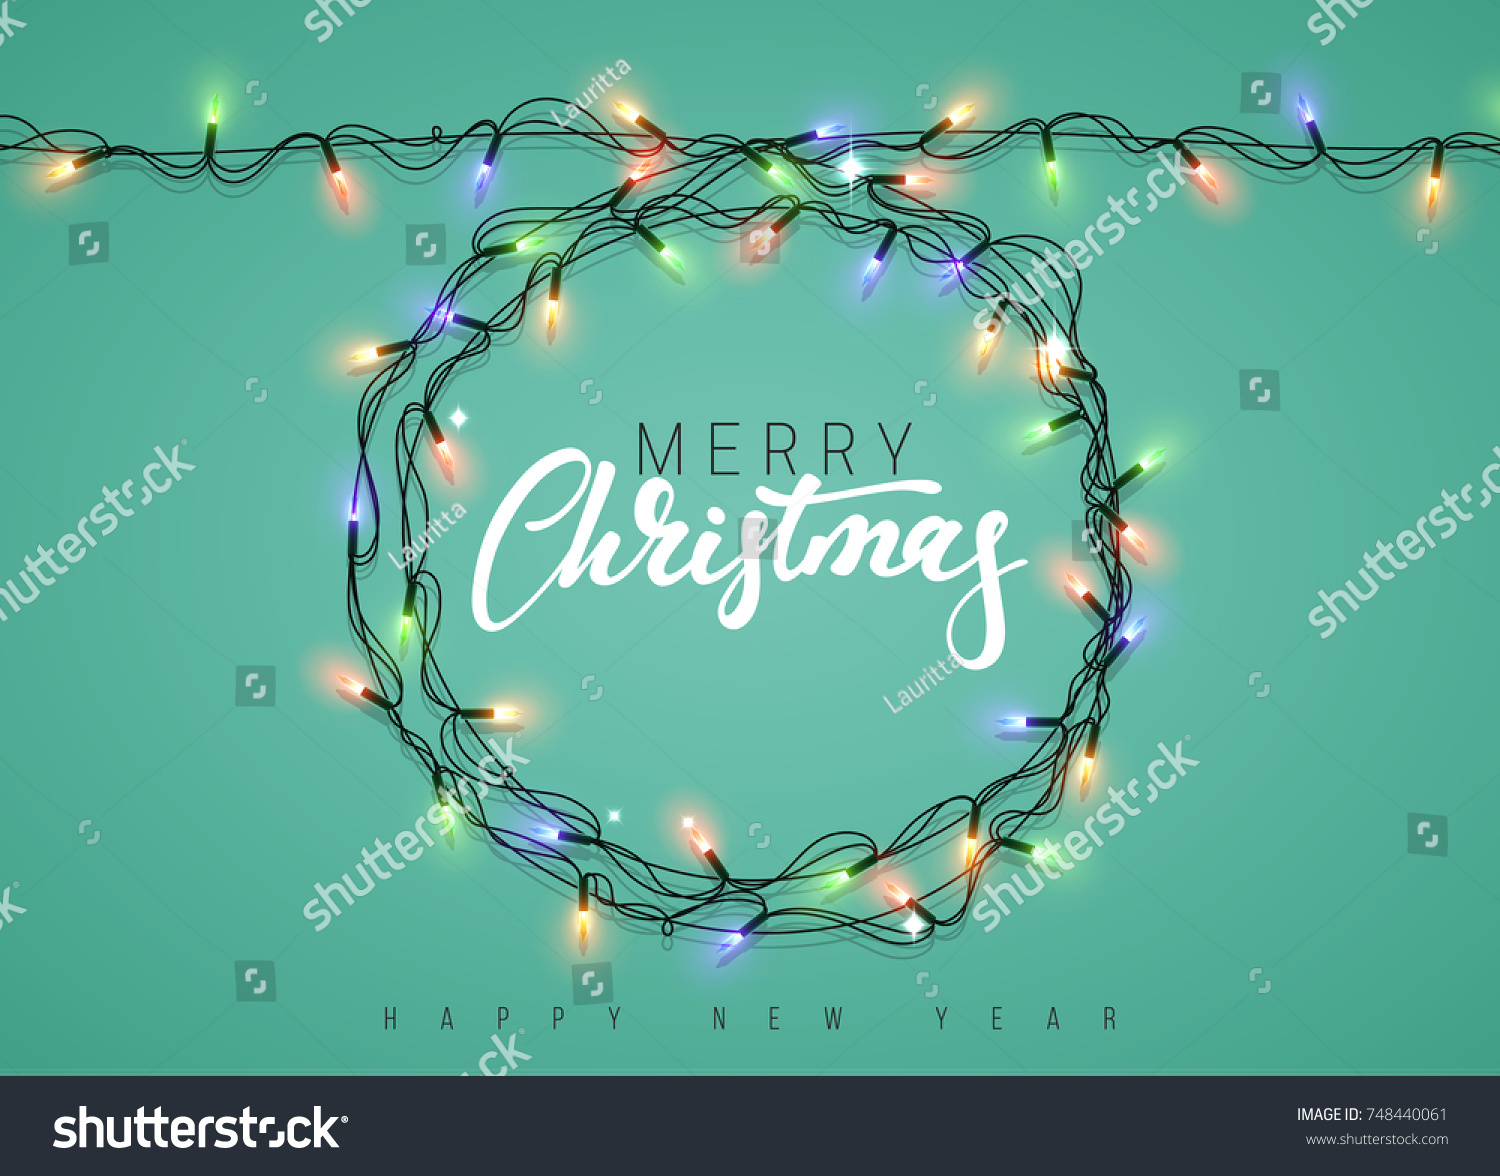 Glowing Christmas Lights Wreath Xmas Holiday Stock Illustration ...